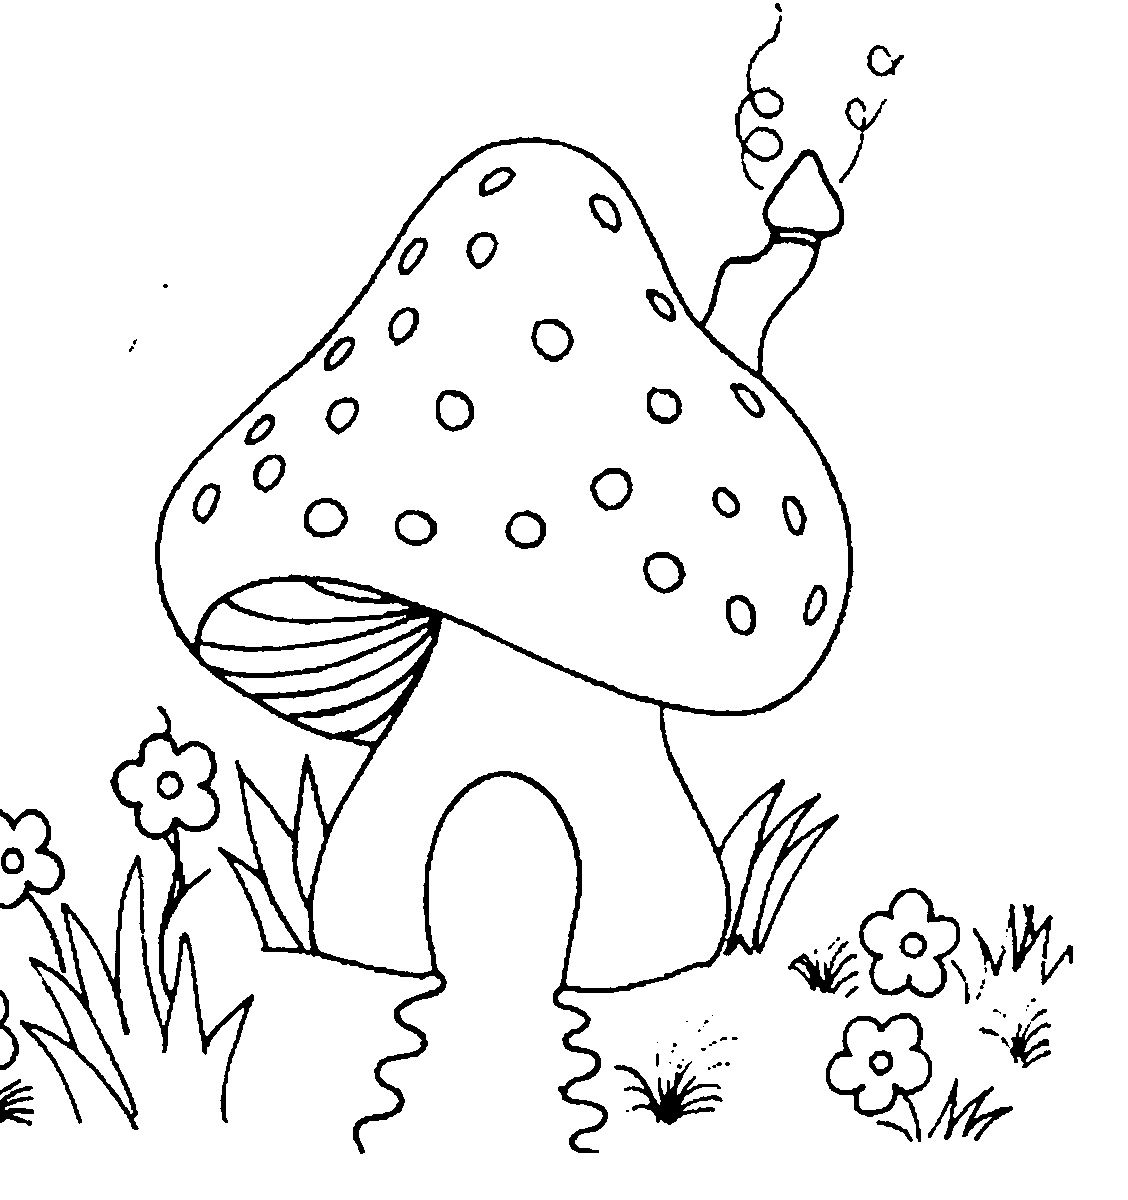 50 desenhos, moldes e riscos de cogumelo para colorir, pintar, imprimir